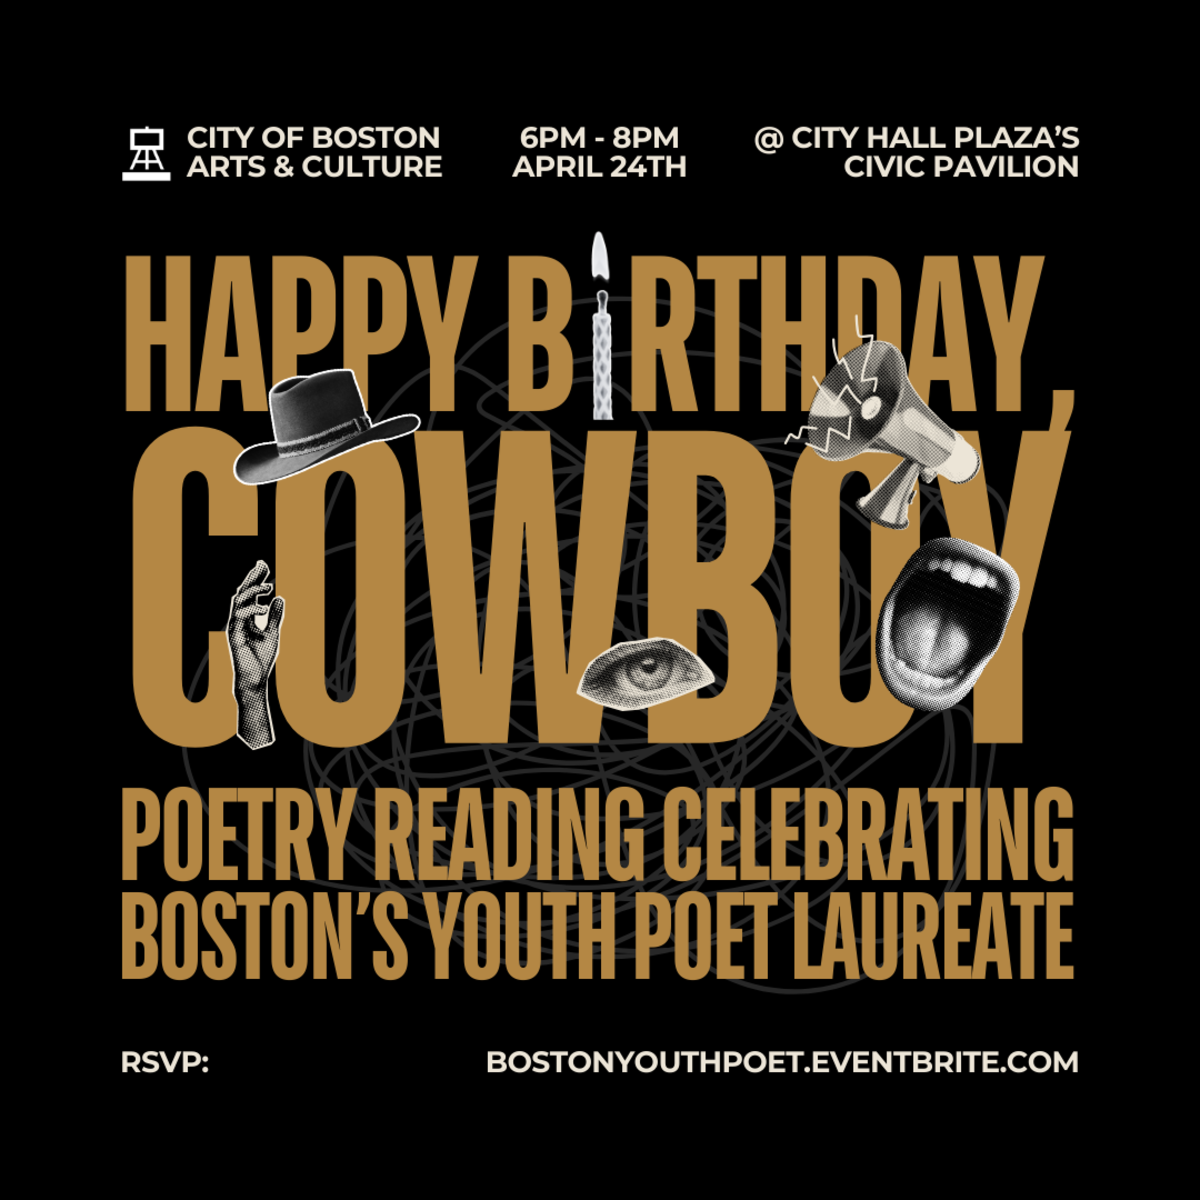 Happy Birthday, Cowboy poster